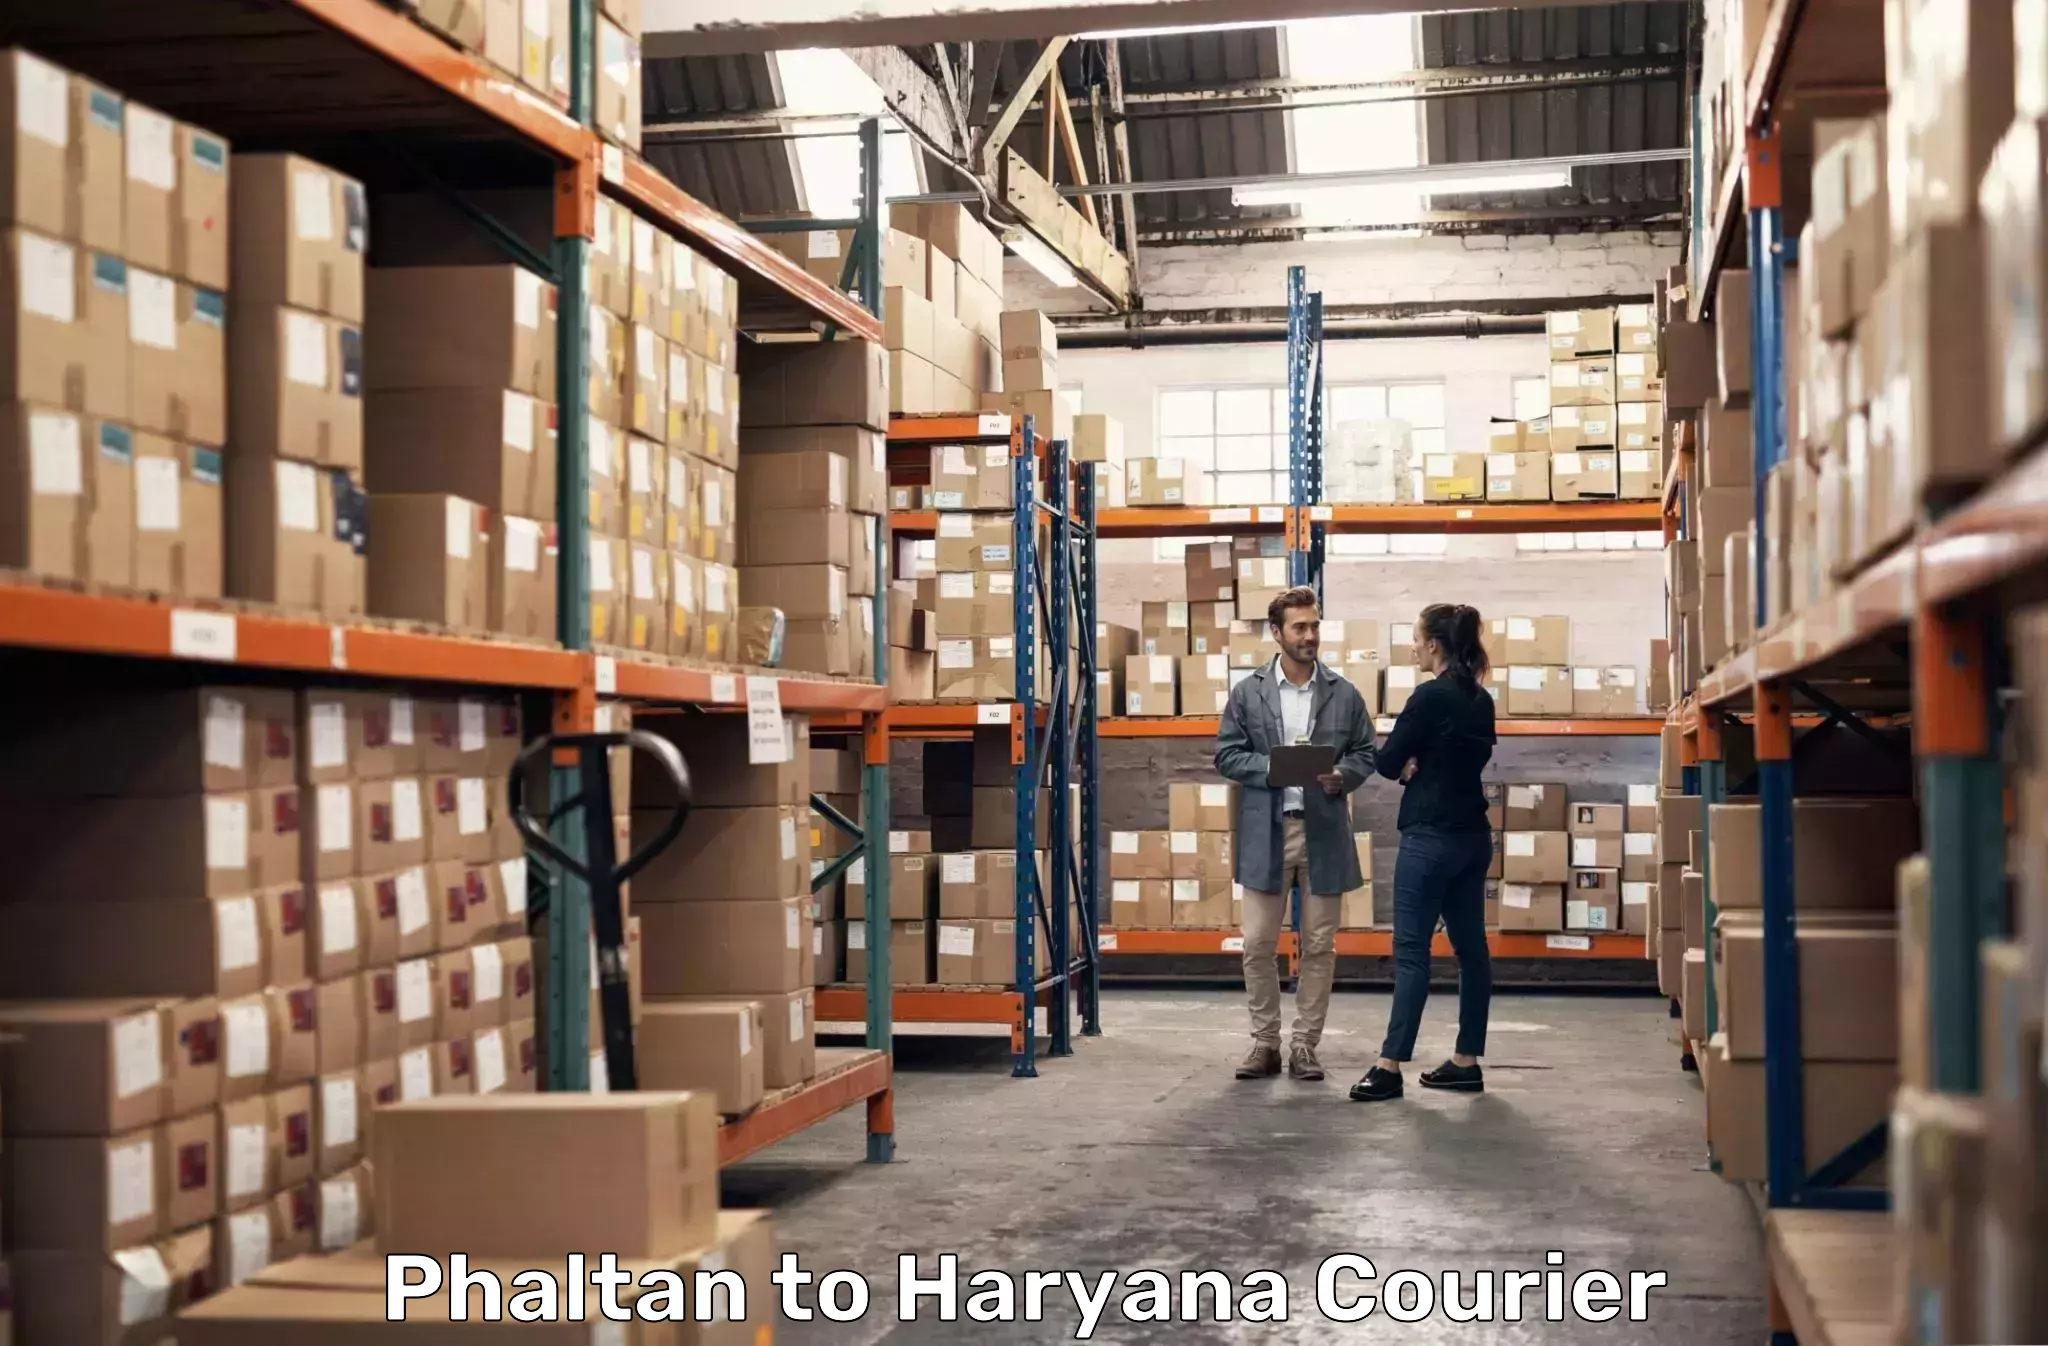 Courier service booking Phaltan to Haryana